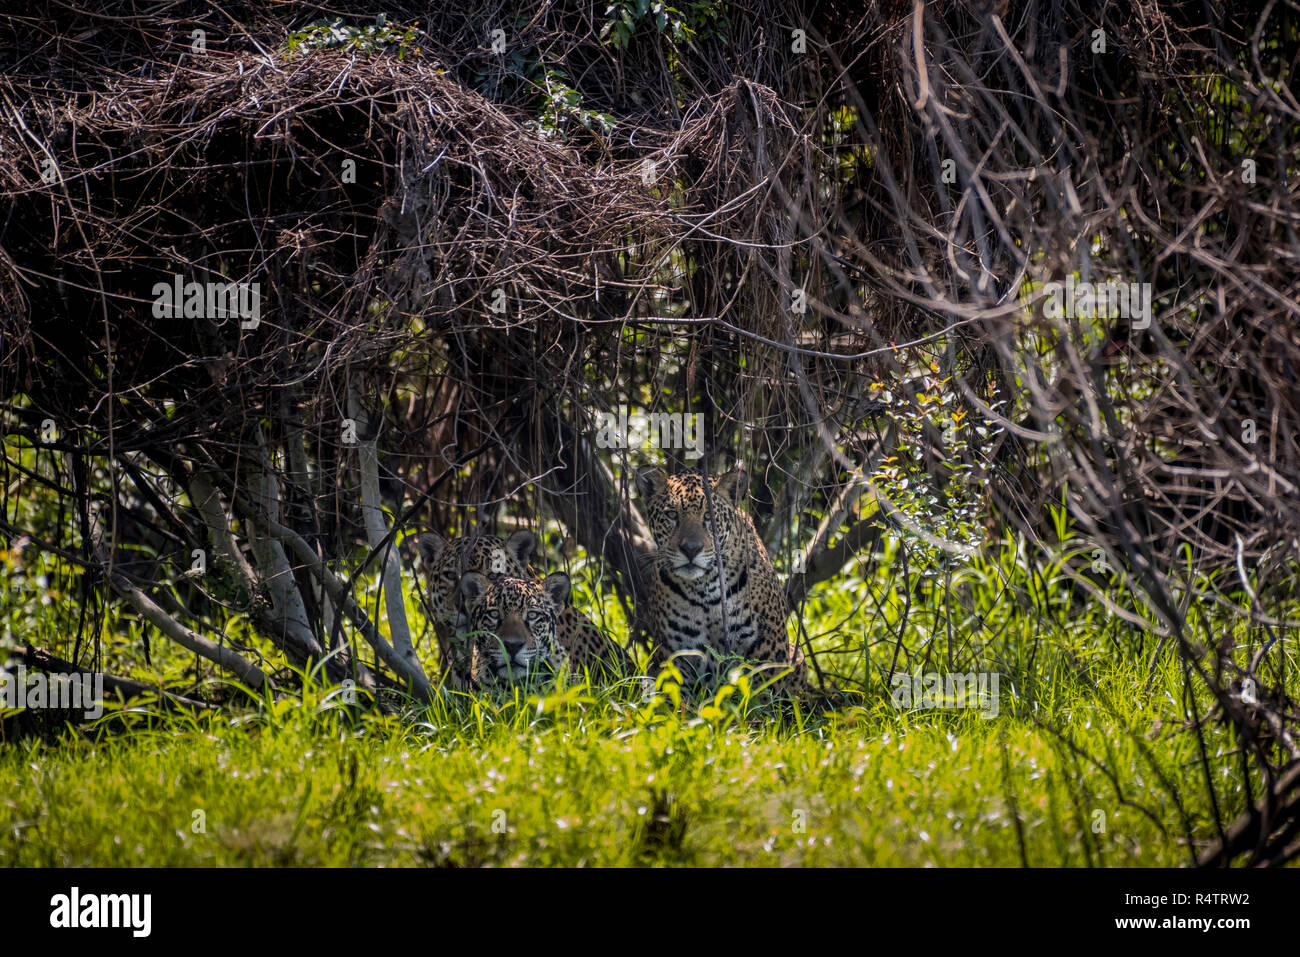 Three Jaguars (Panthera onca) hidden in dense vegetation in the bushes, Barranco Alto, Pantanal, Mato Grosso do Sul, Brazil Stock Photo